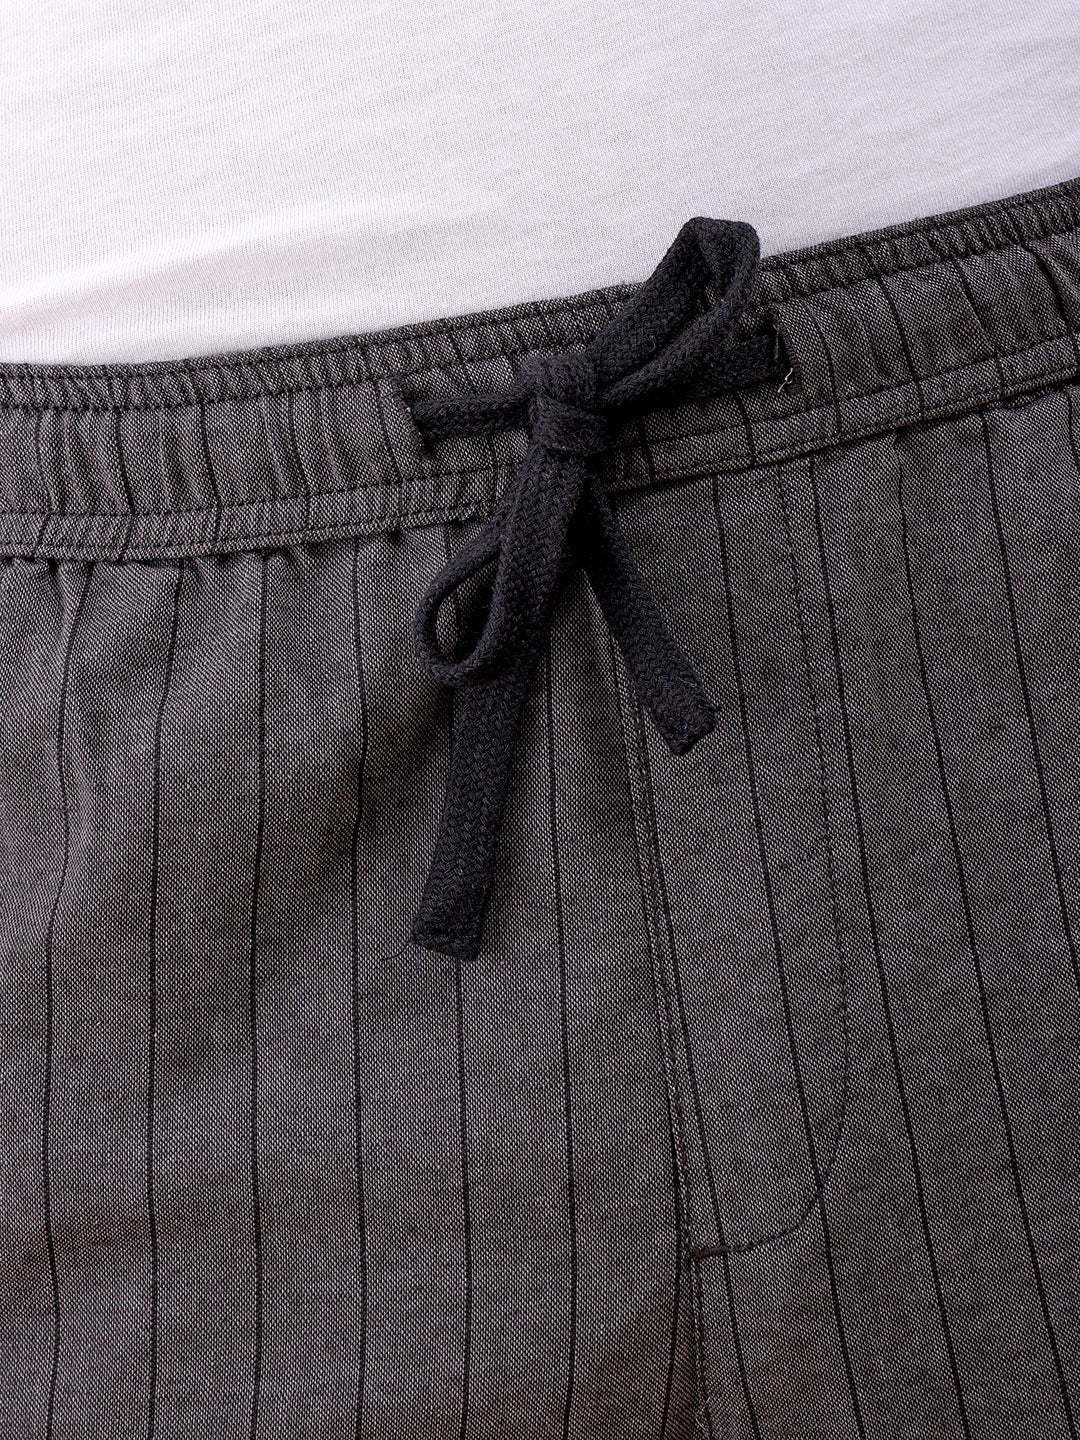 Shop Men Striped Trousers Online.